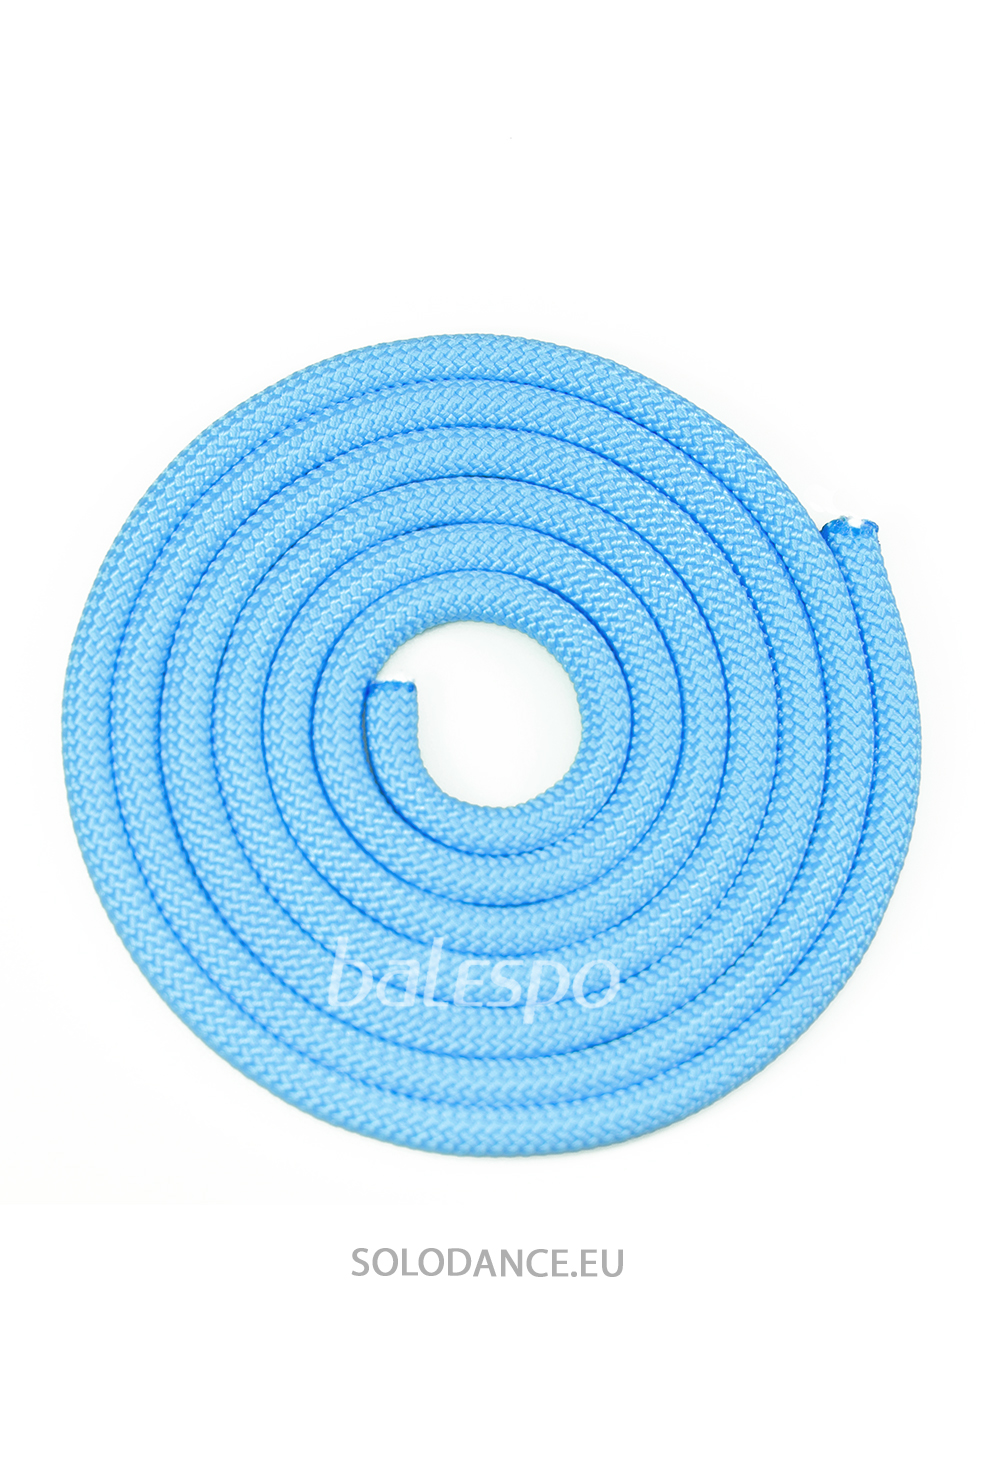 Gymnastic rope BALESPO light blue 2,5 m